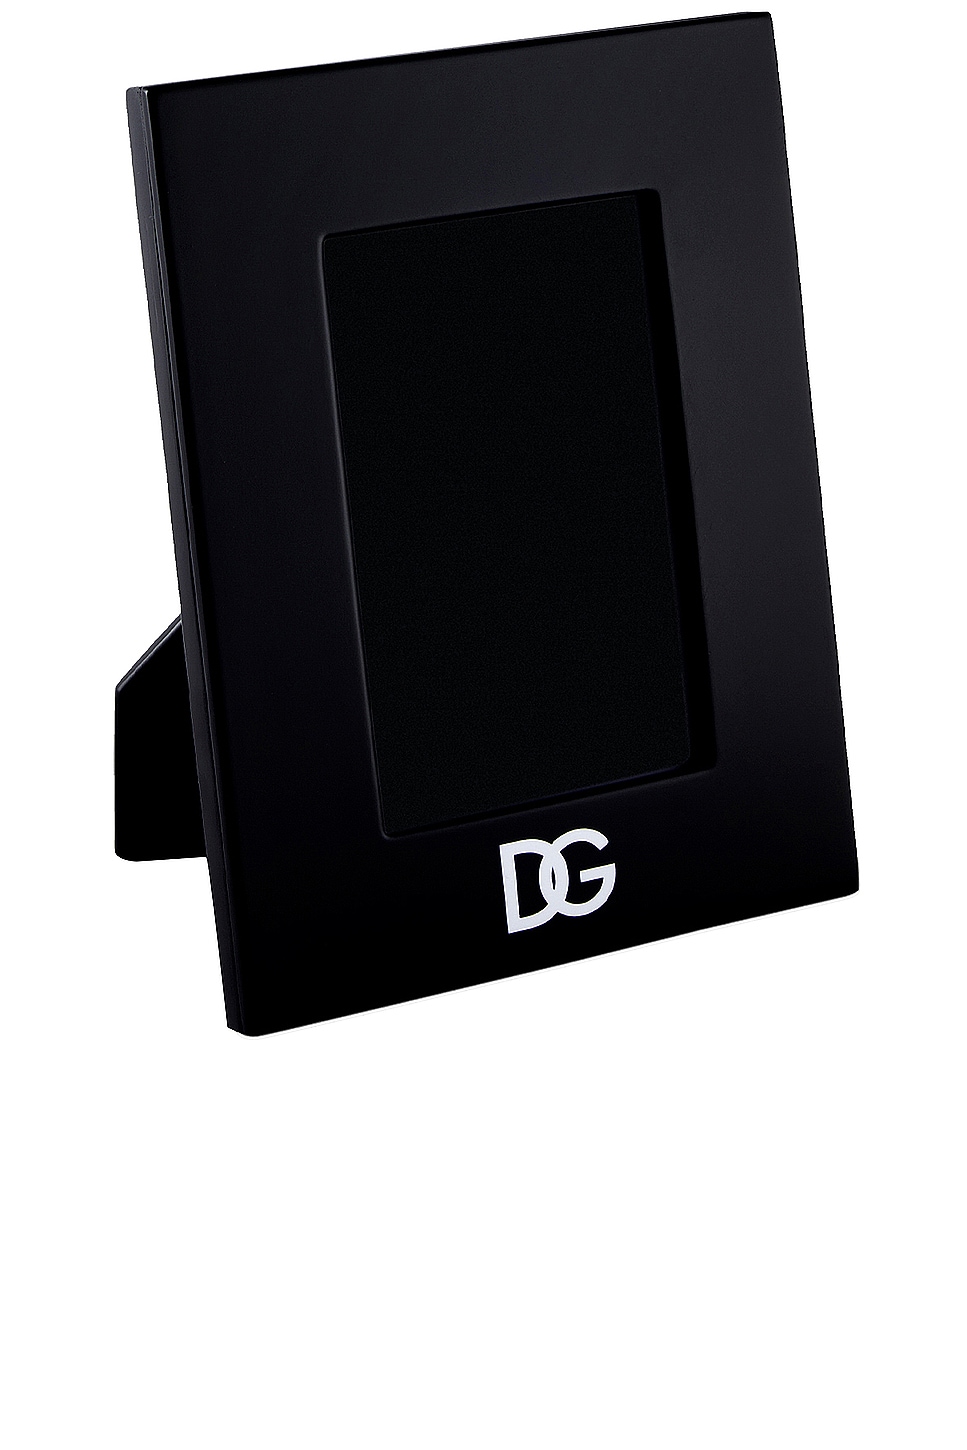 Image 1 of Dolce & Gabbana Casa Dg Logo Picture Frame in Black